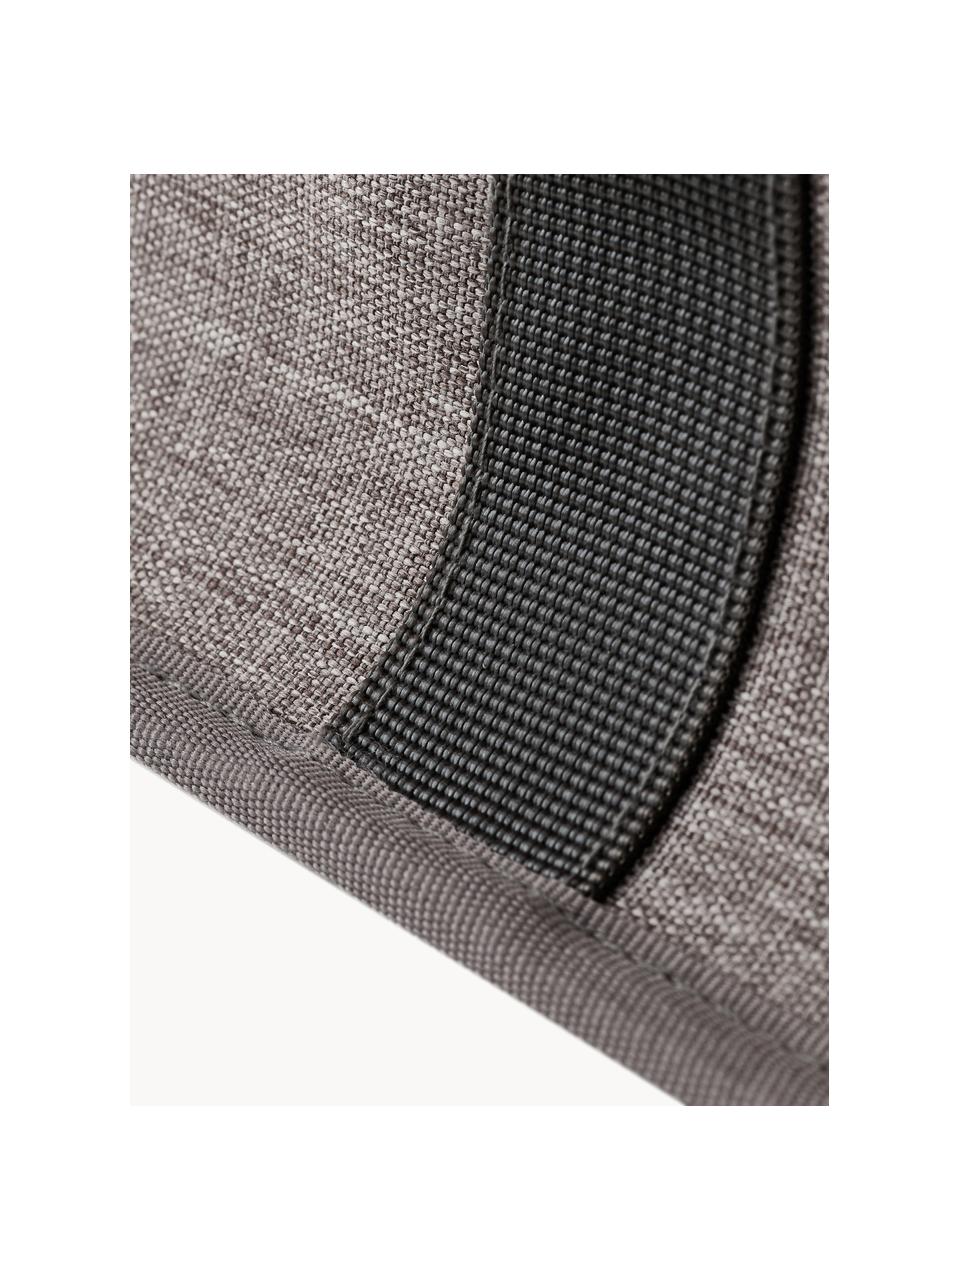 Wäschekorb Hold-All, 100 % Polyester, Grau, B 52 x H 25 cm